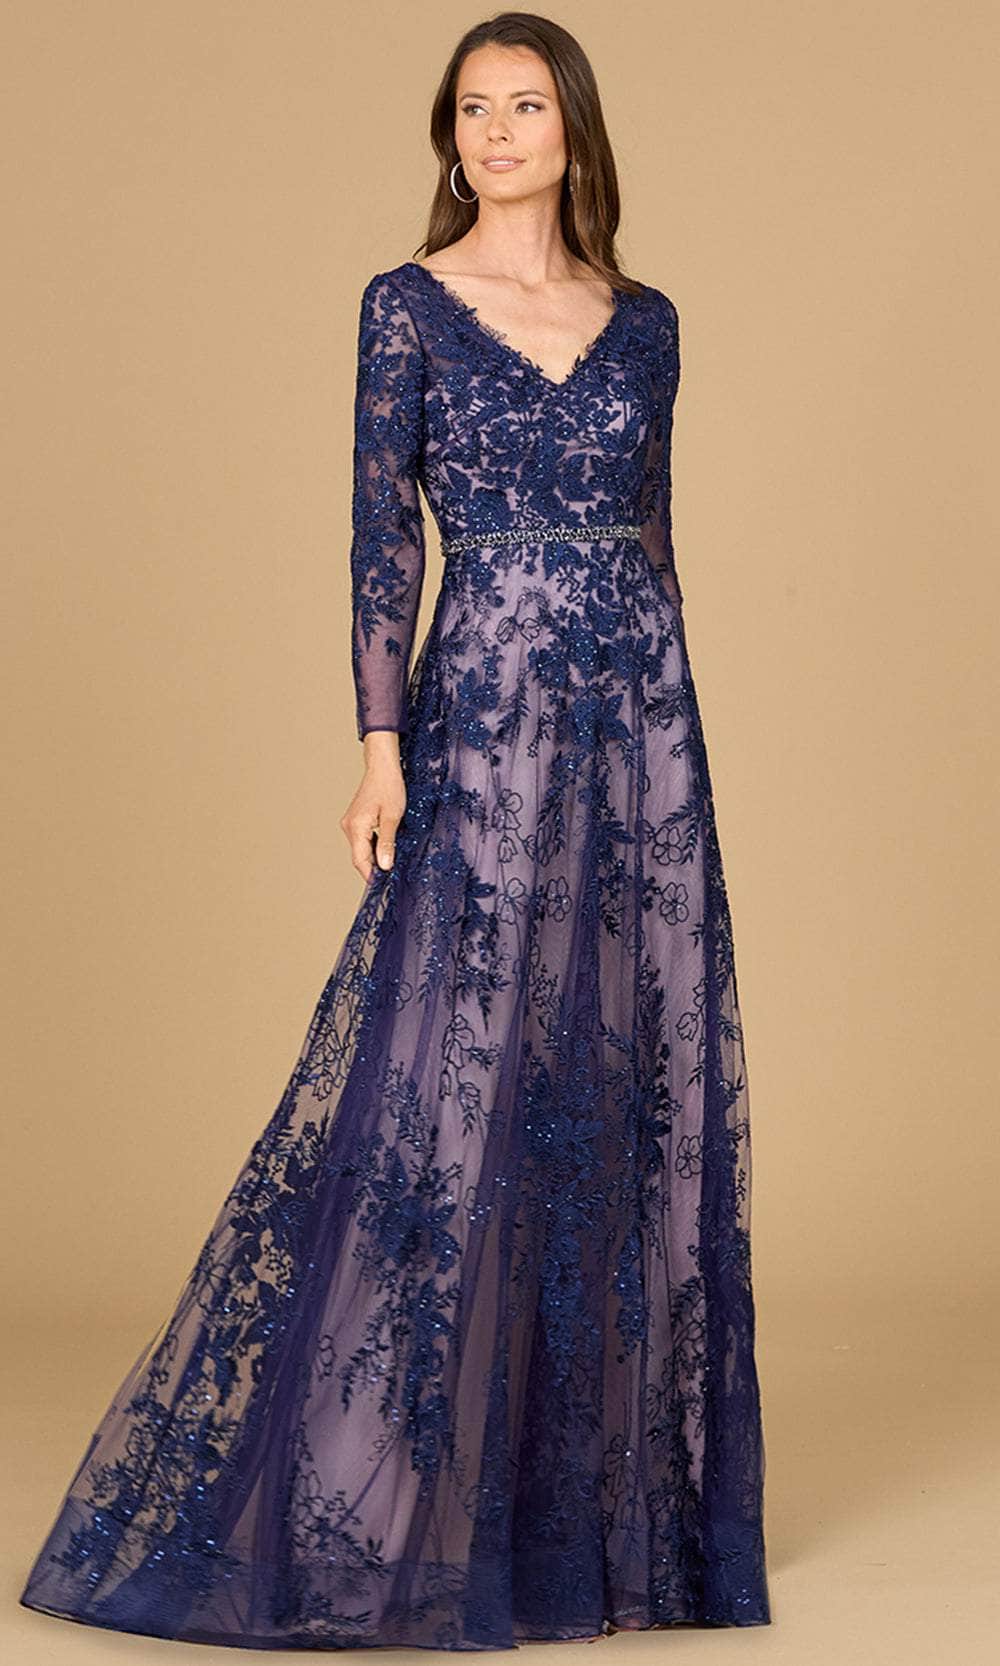 Lara Dresses 29132 - Lace A-Line Evening Gown
